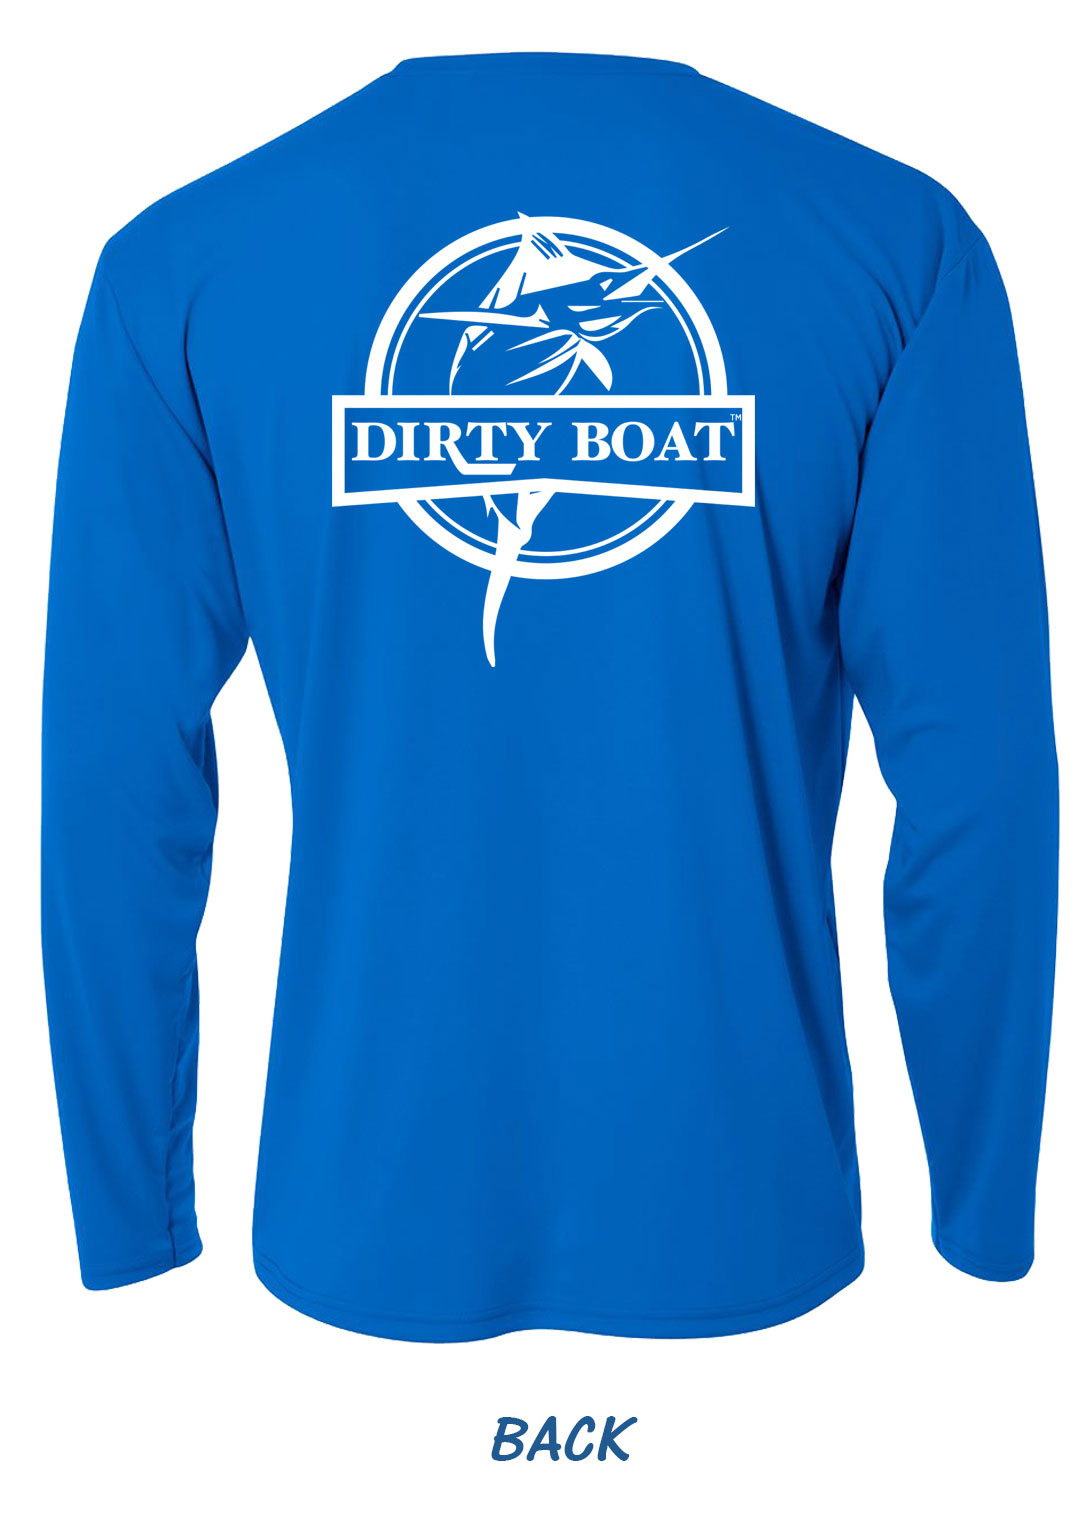 DirtyBoat 2.0 BLUE Performance Shirt - DirtyBoat